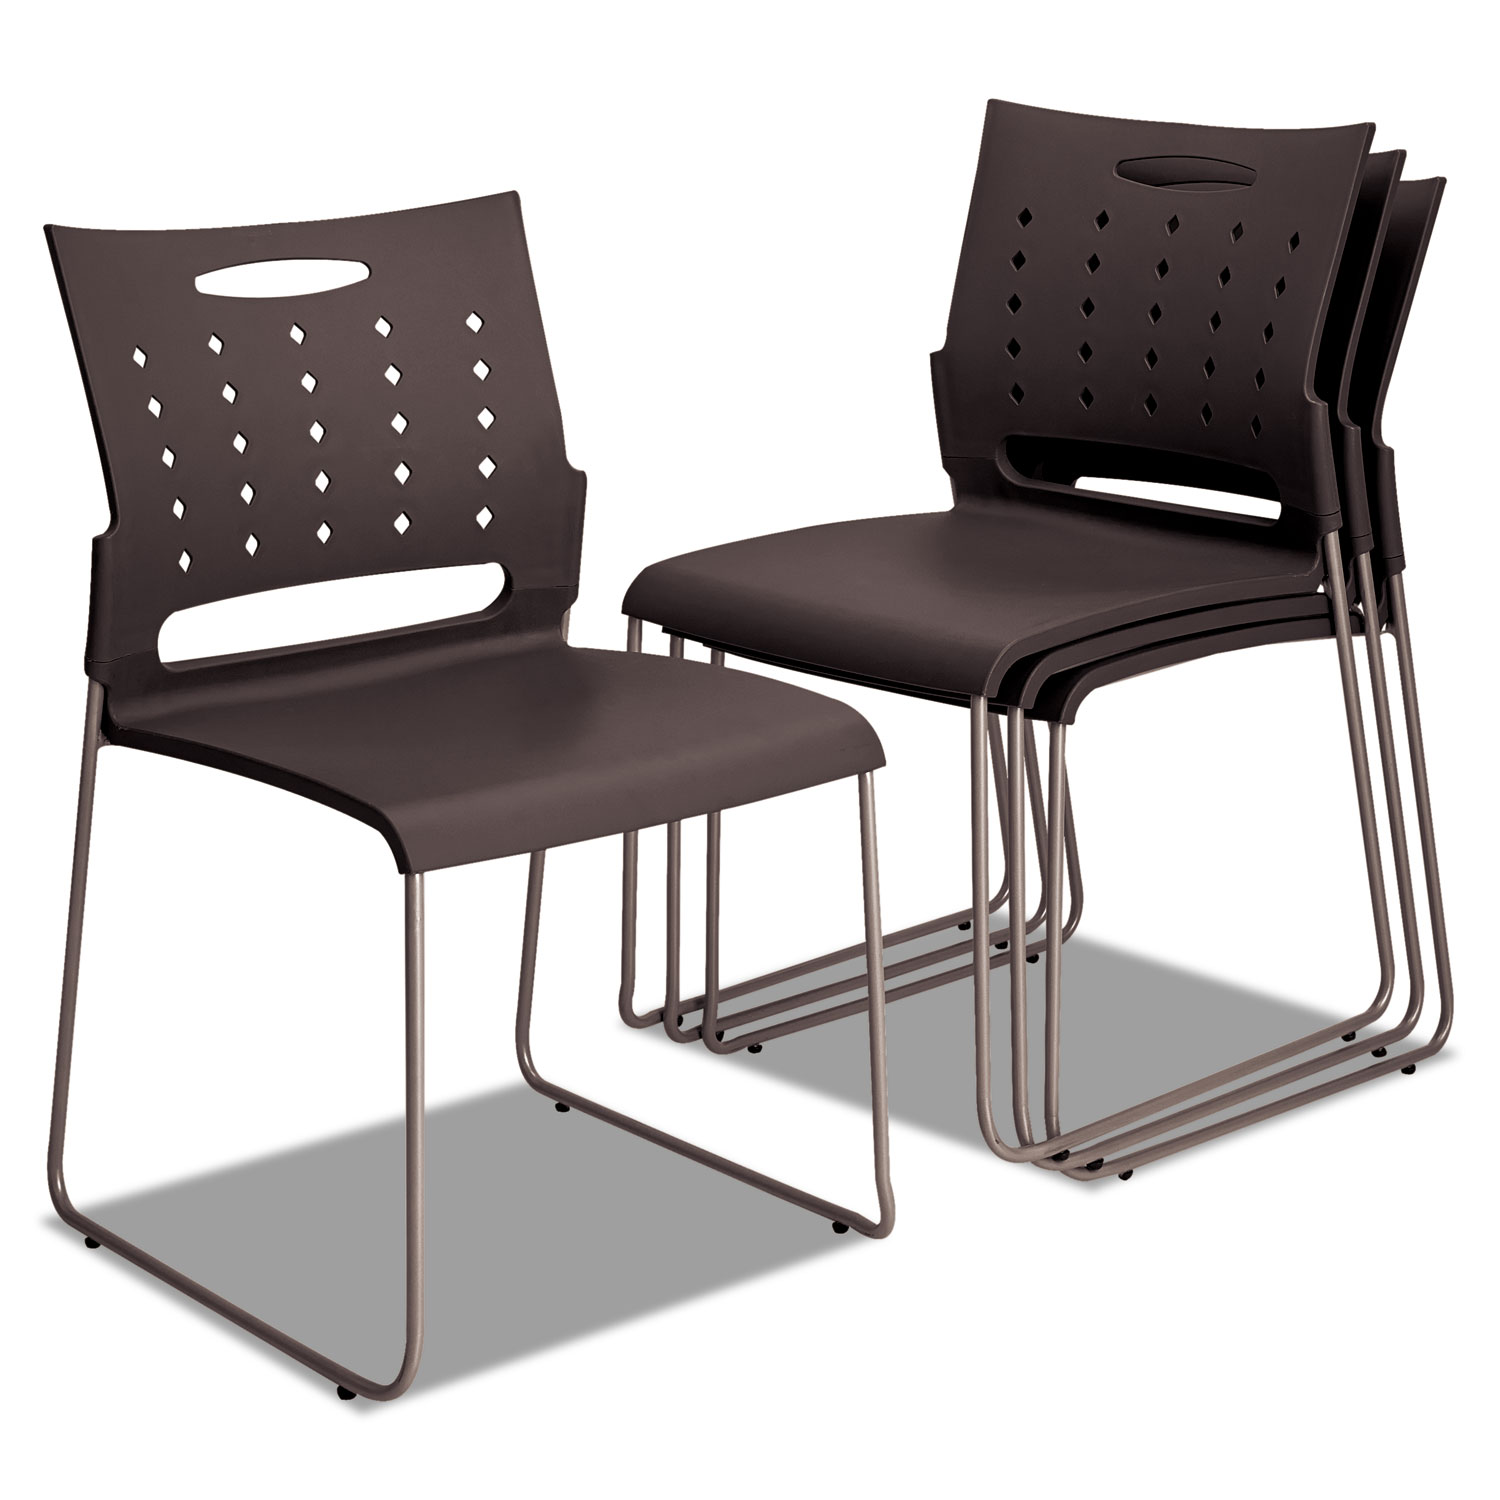  Alera ALESC6546 Alera Continental Series Plastic Perforated Back Stack Chair, Charcoal Gray Seat/Back, Gunmetal Gray Base, 4/Carton (ALESC6546) 